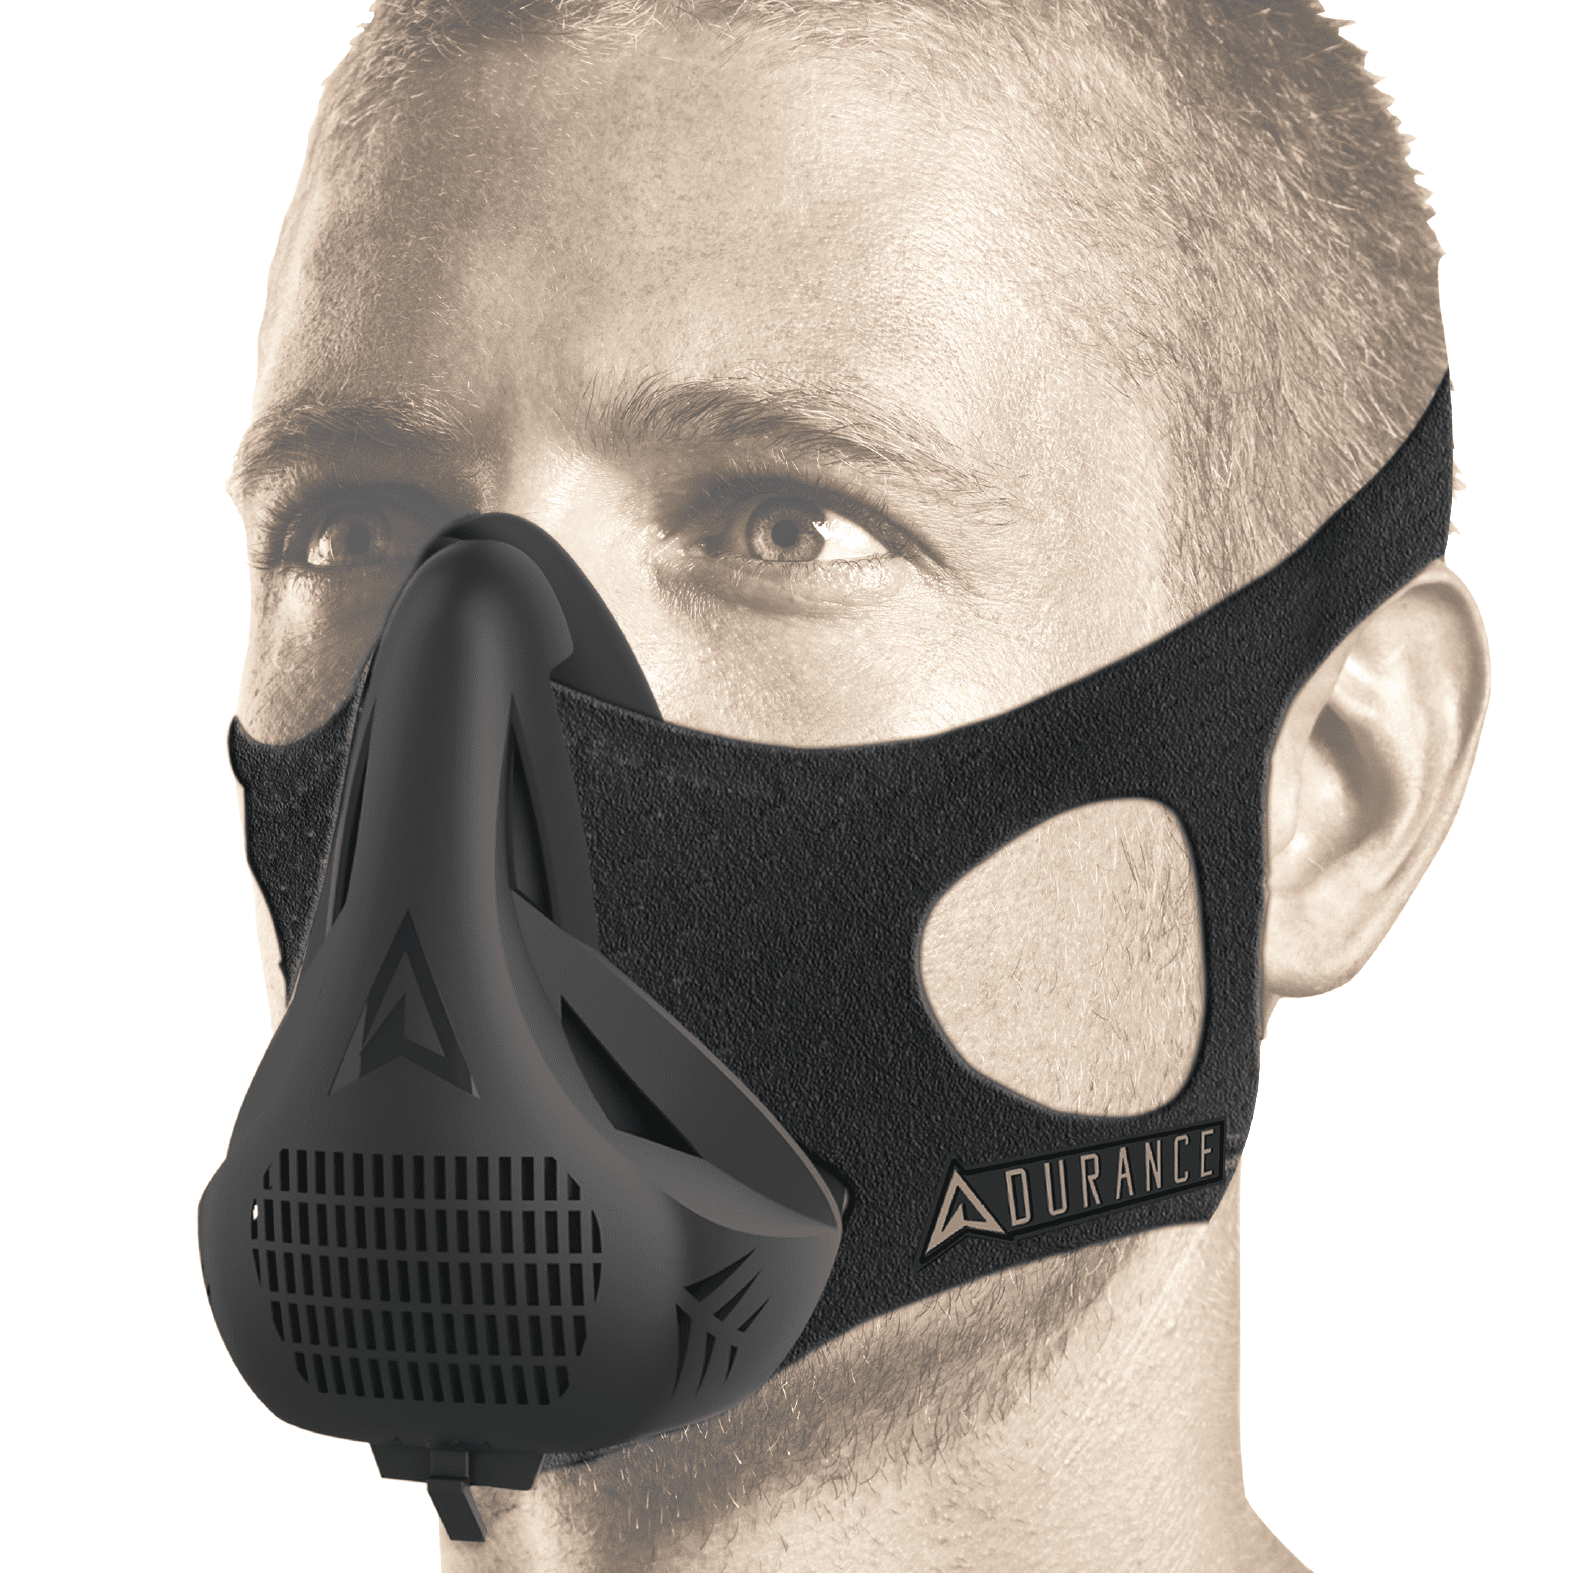 Adurance High Altitude Training Mask (S-HATM-01)